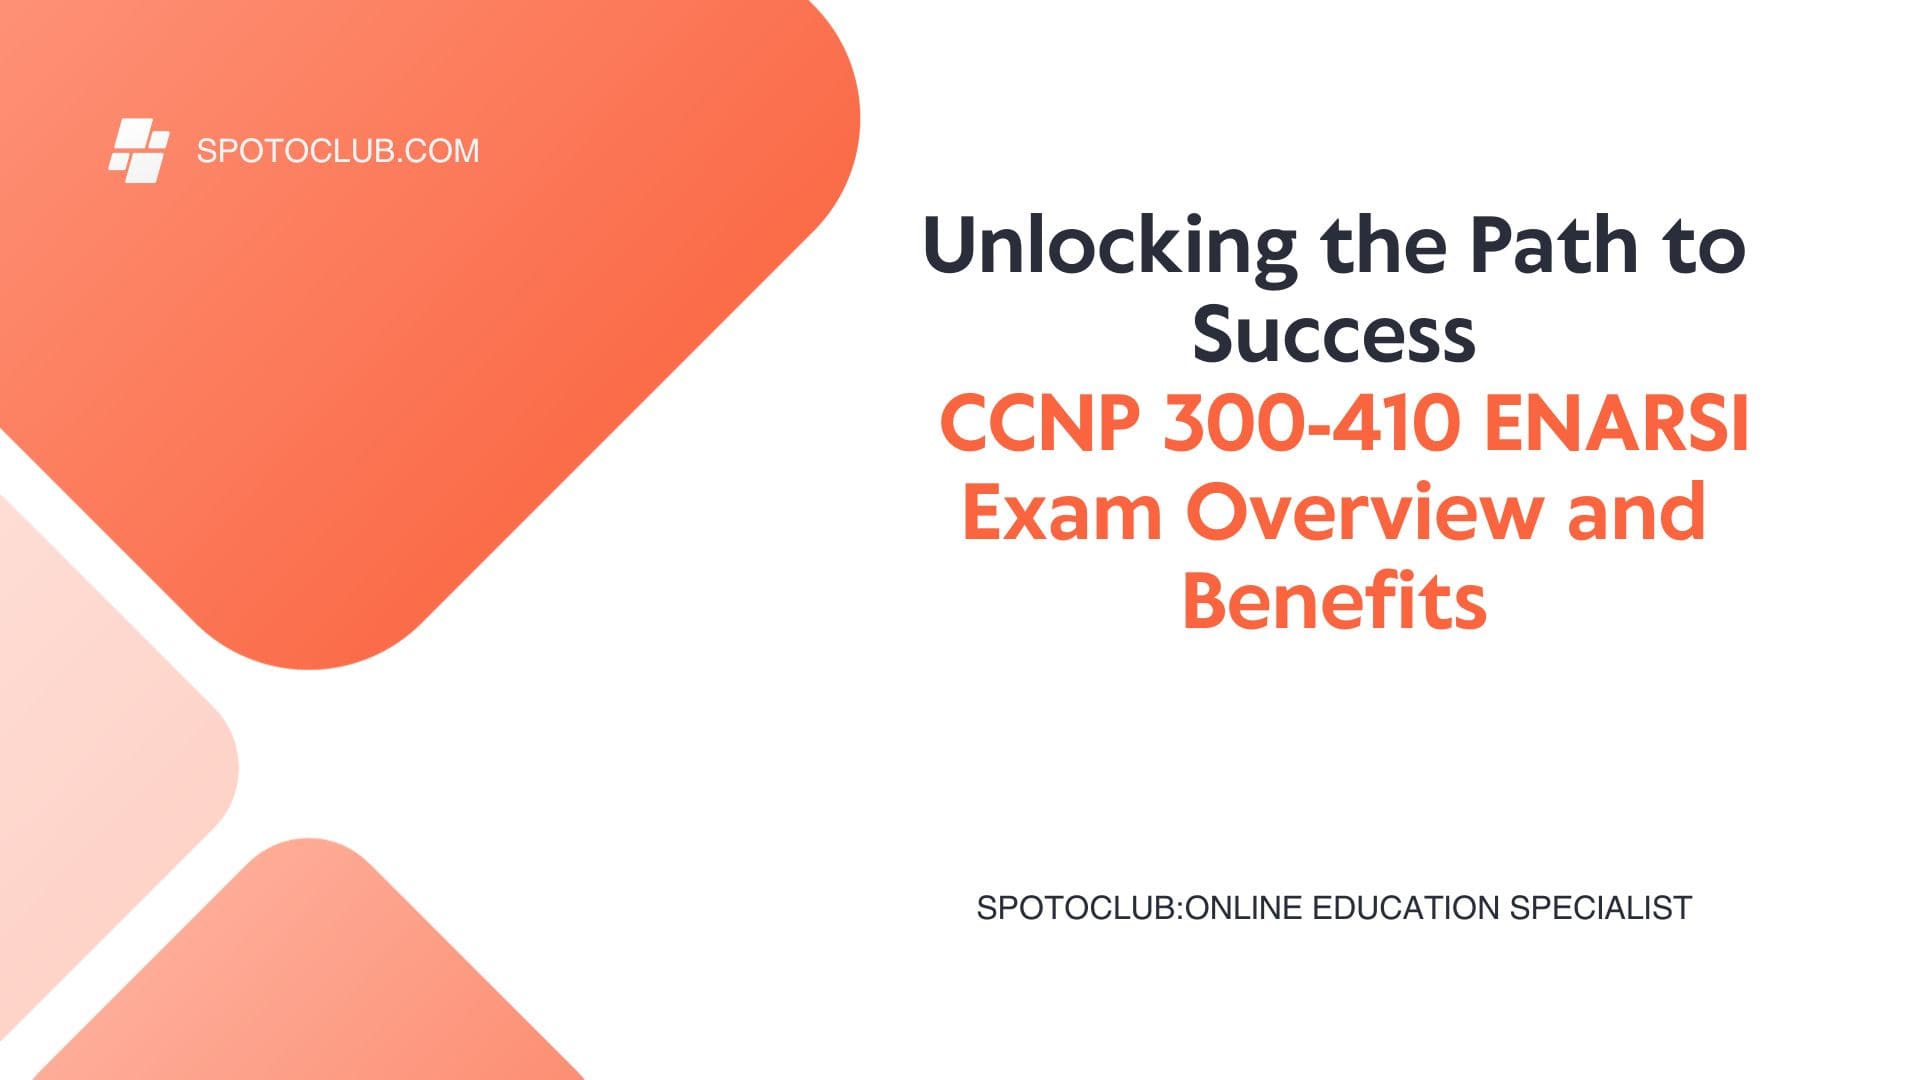 CCNP 300-410 ENARSI Exam Overview and Benefits